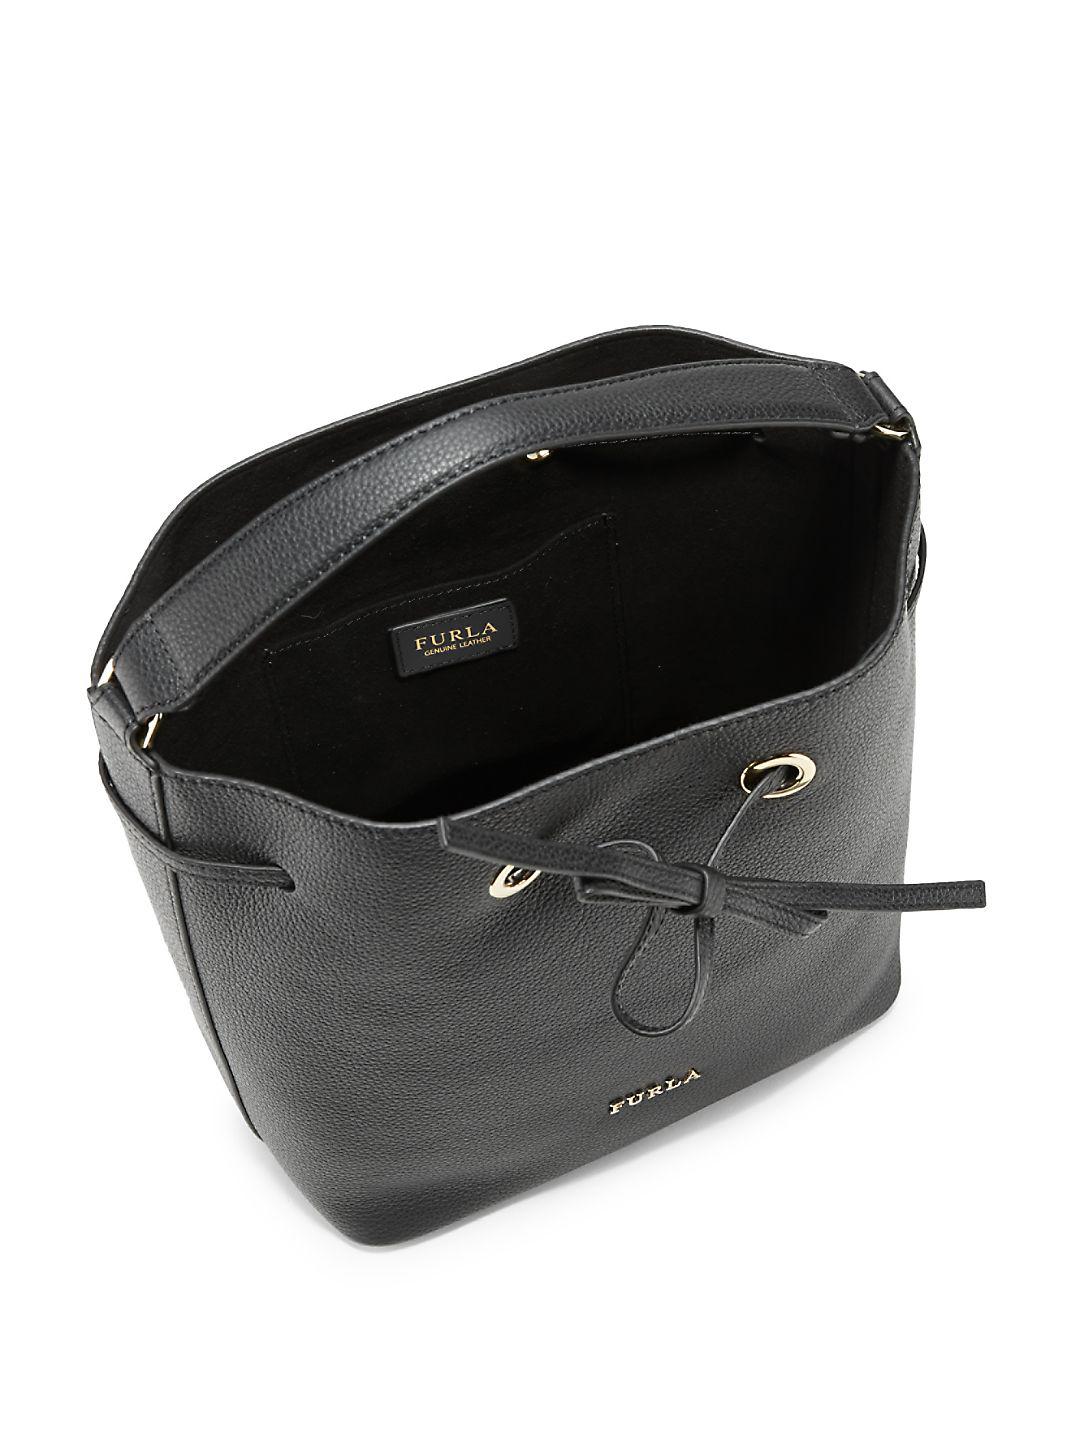 Furla Costanza Leather Bucket Bag in Black - Lyst